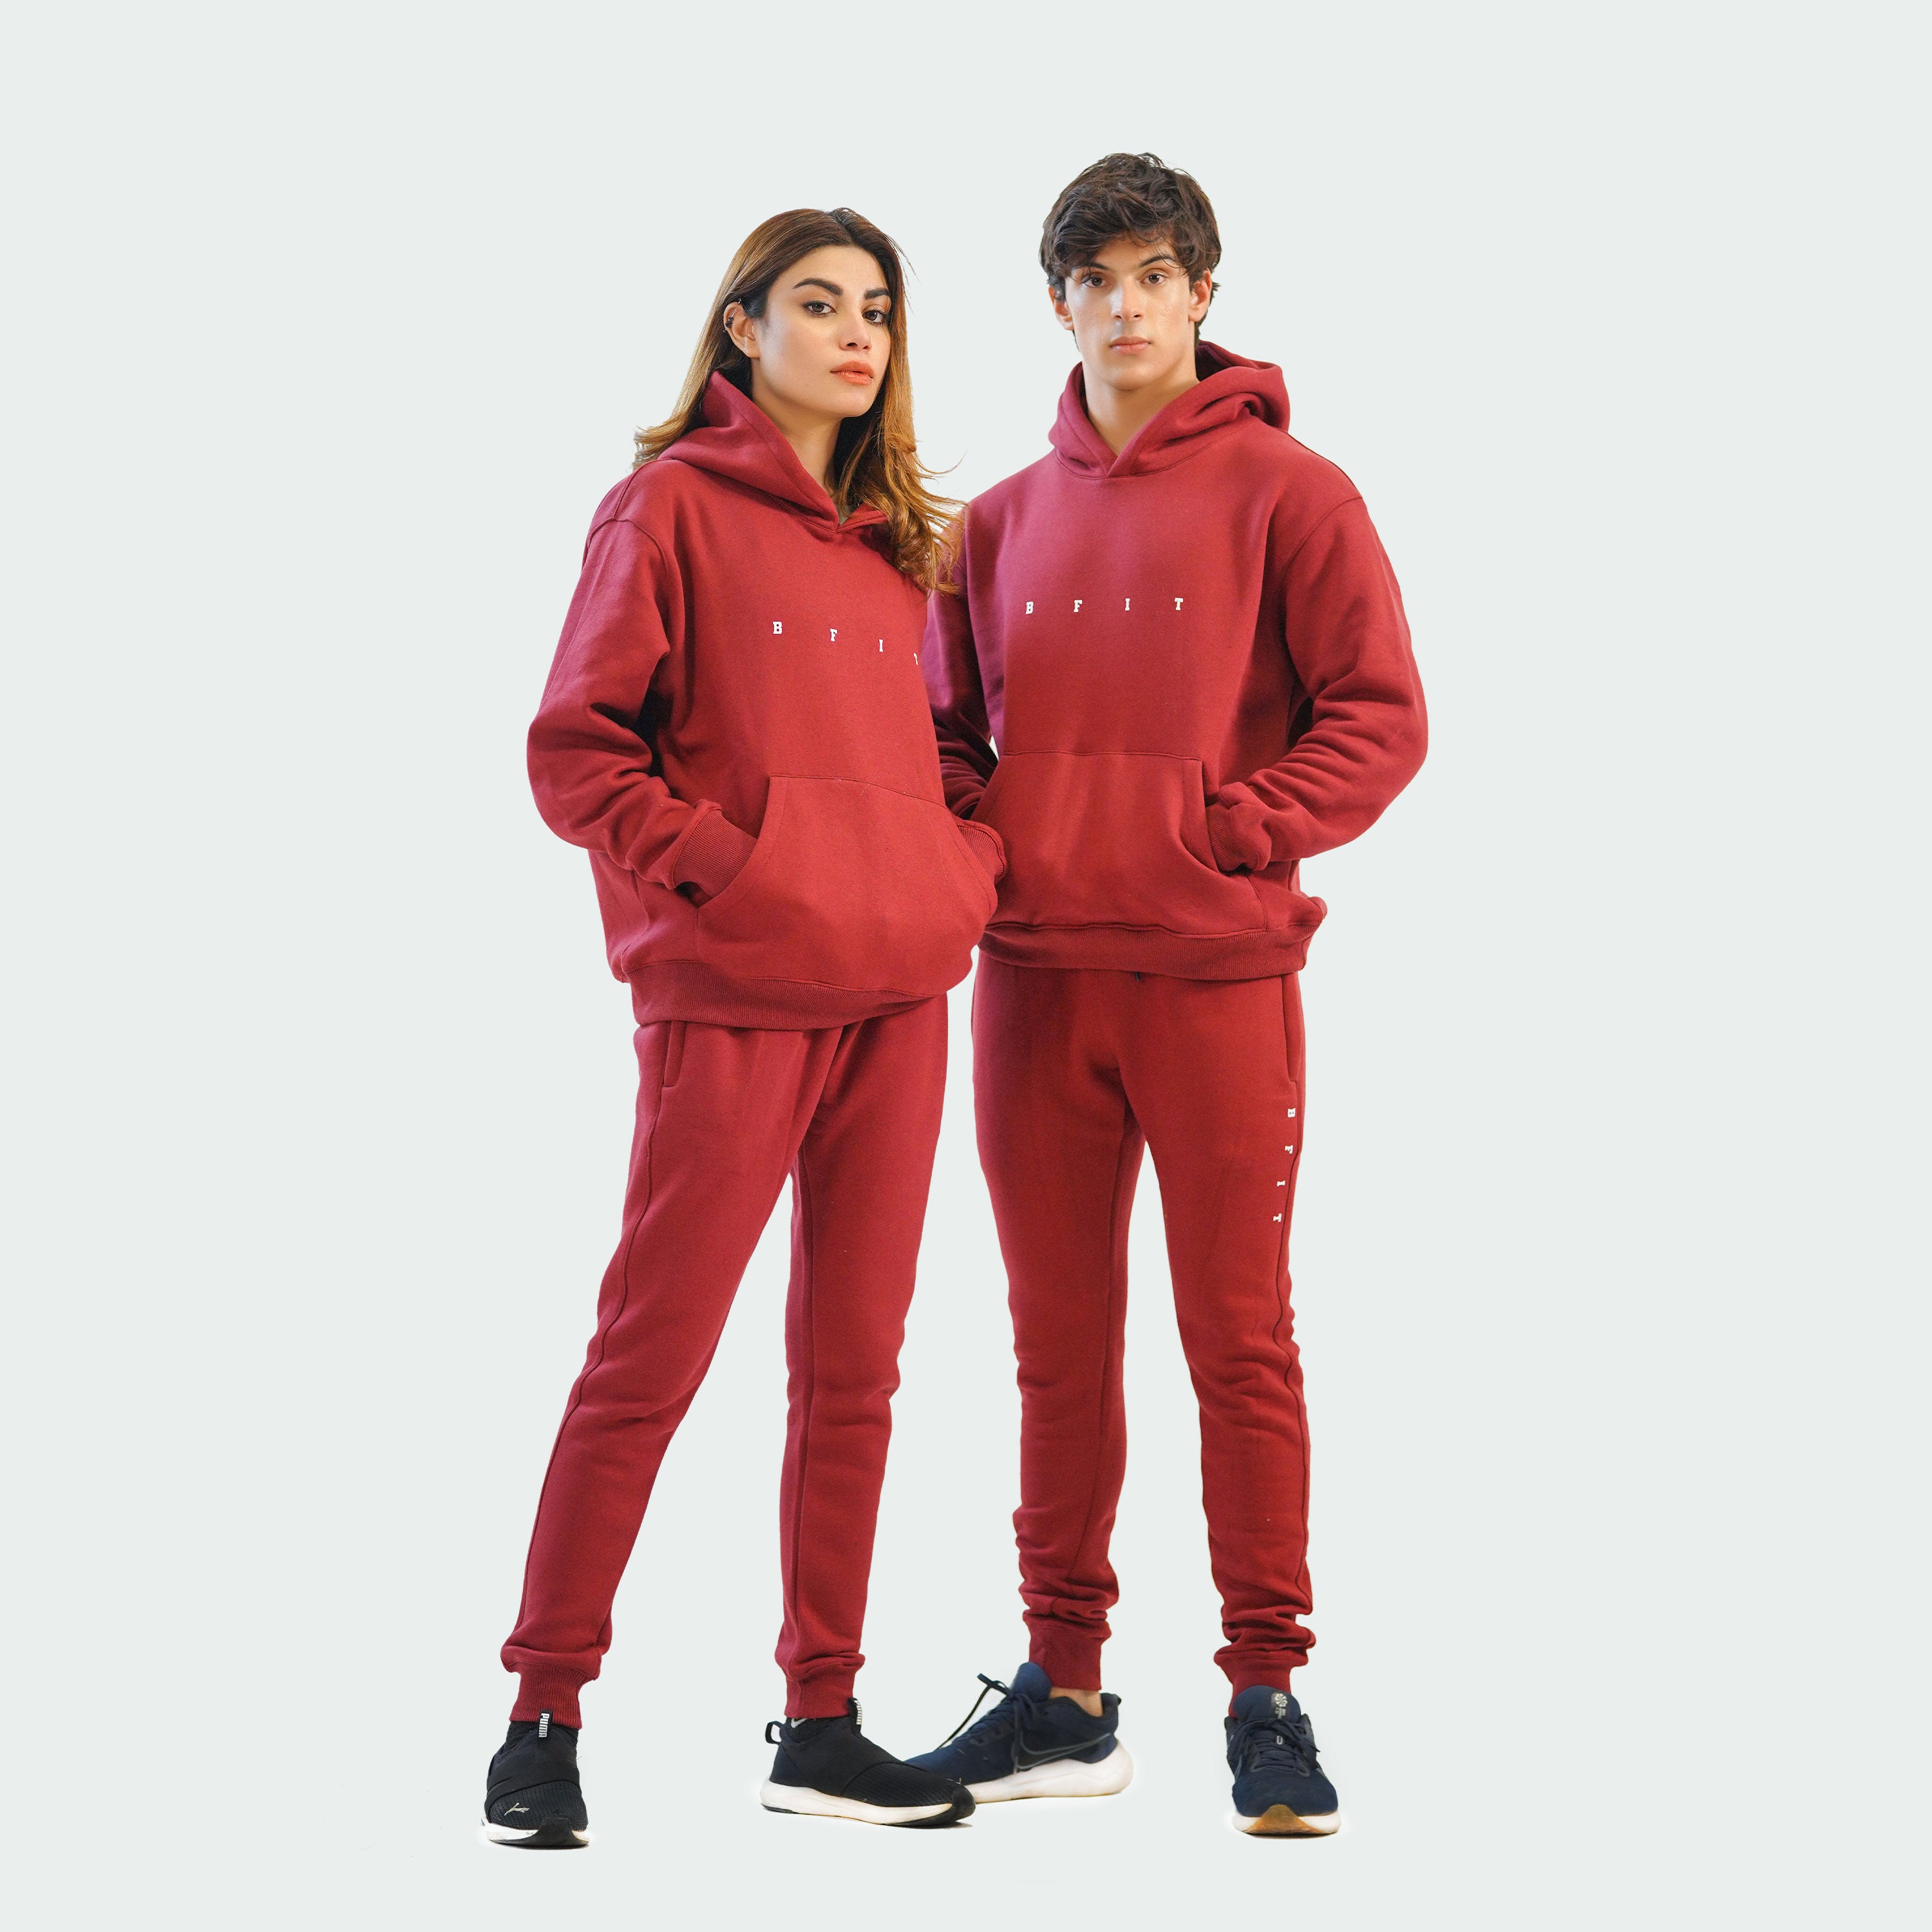 Unisex Athletic Set - Red